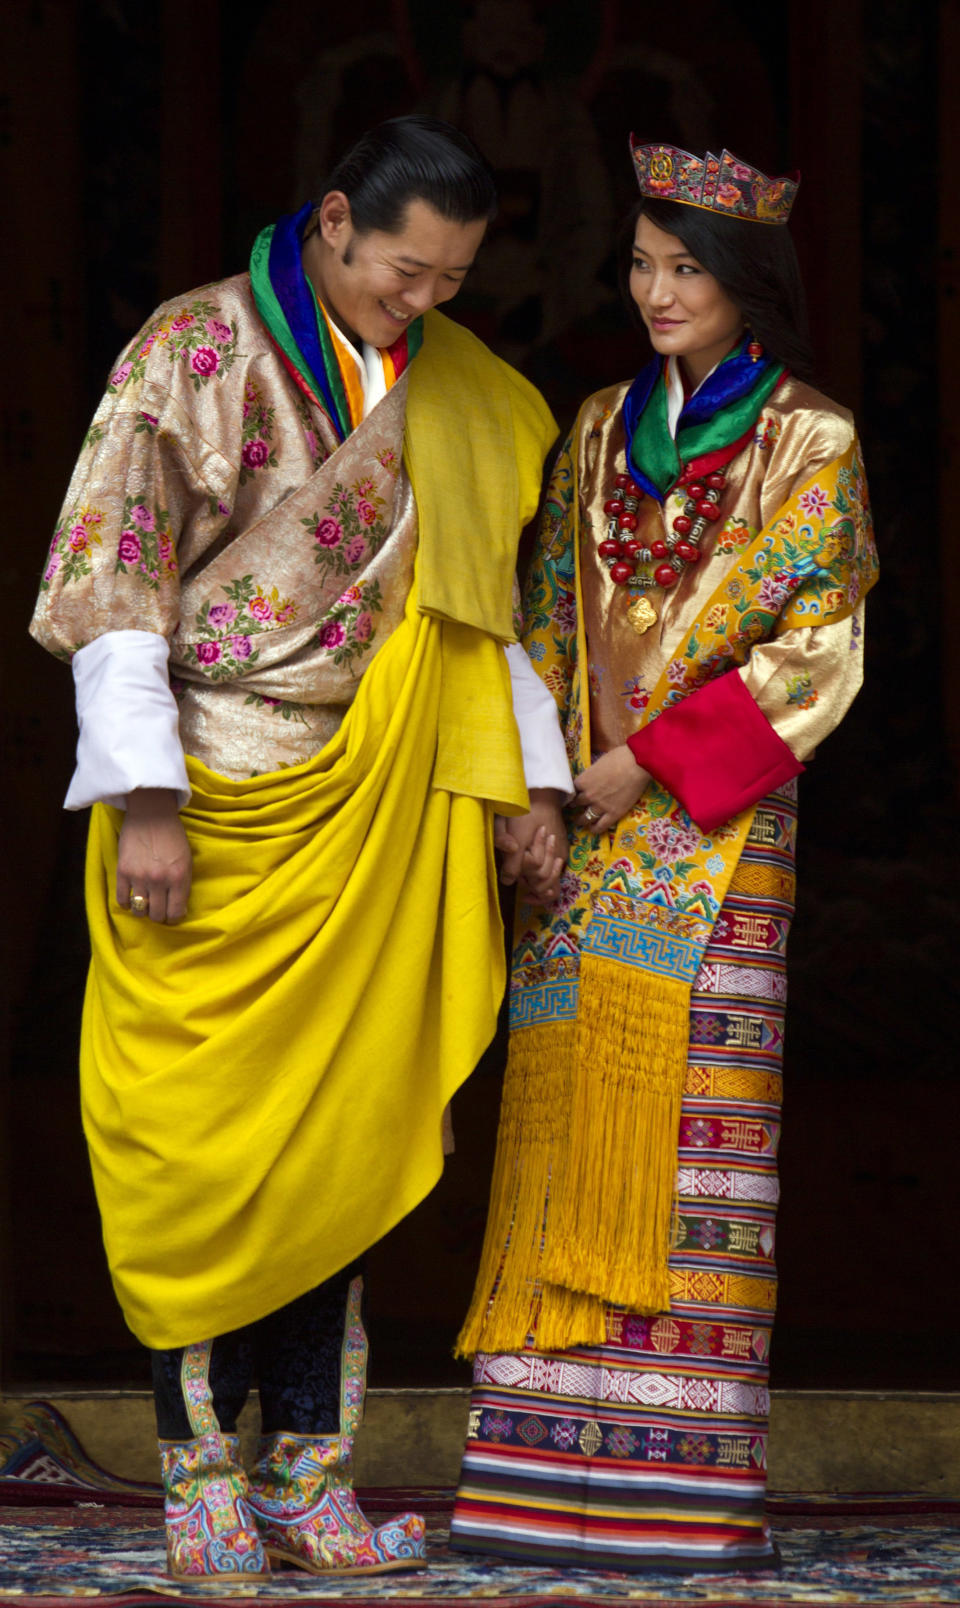 Bhutan's Royal Wedding